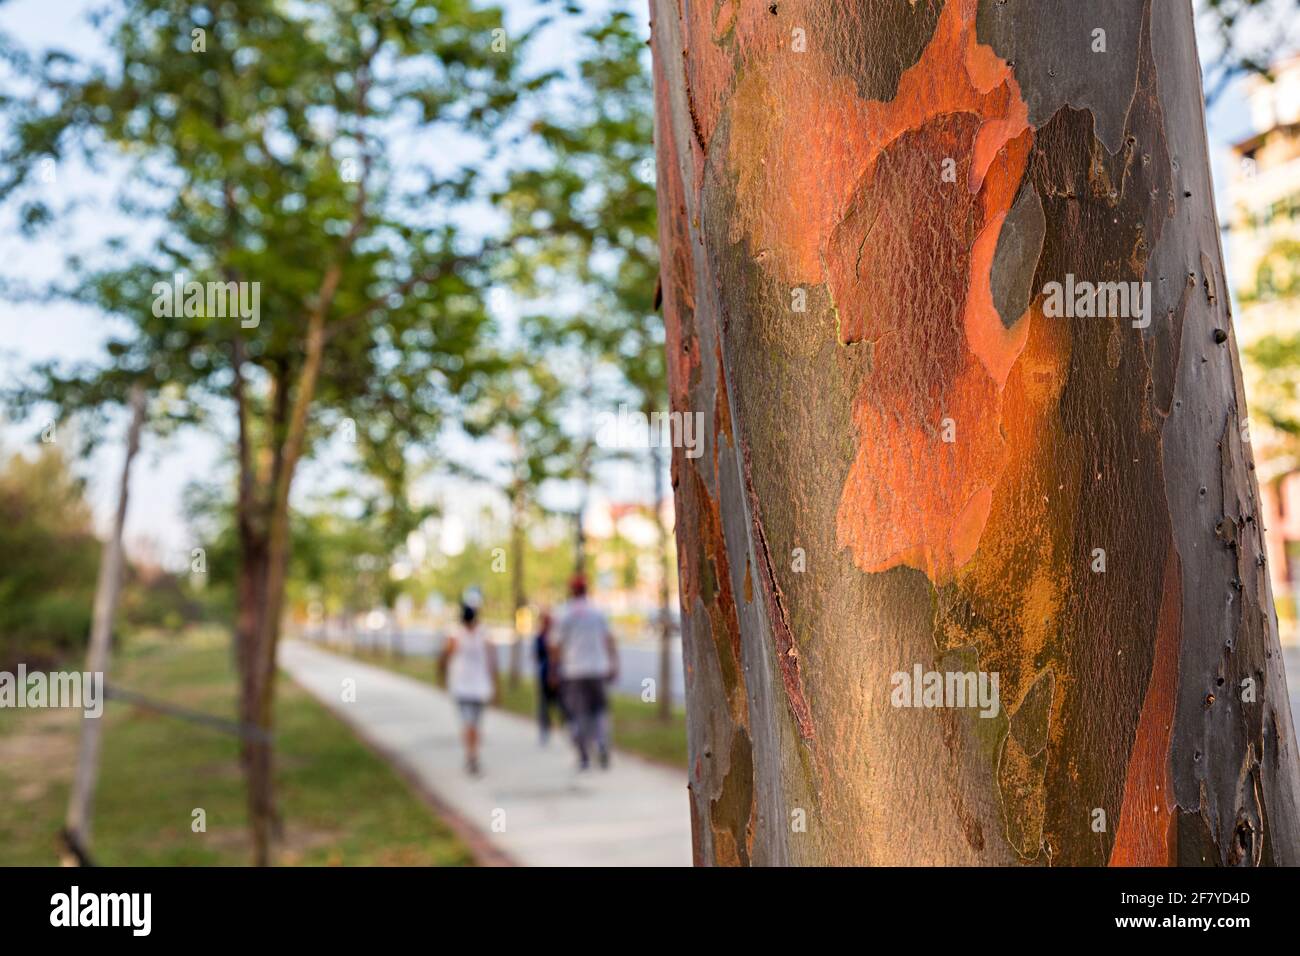 Red peeling bark on tree lining road, Miri, Malaysia Stock Photo